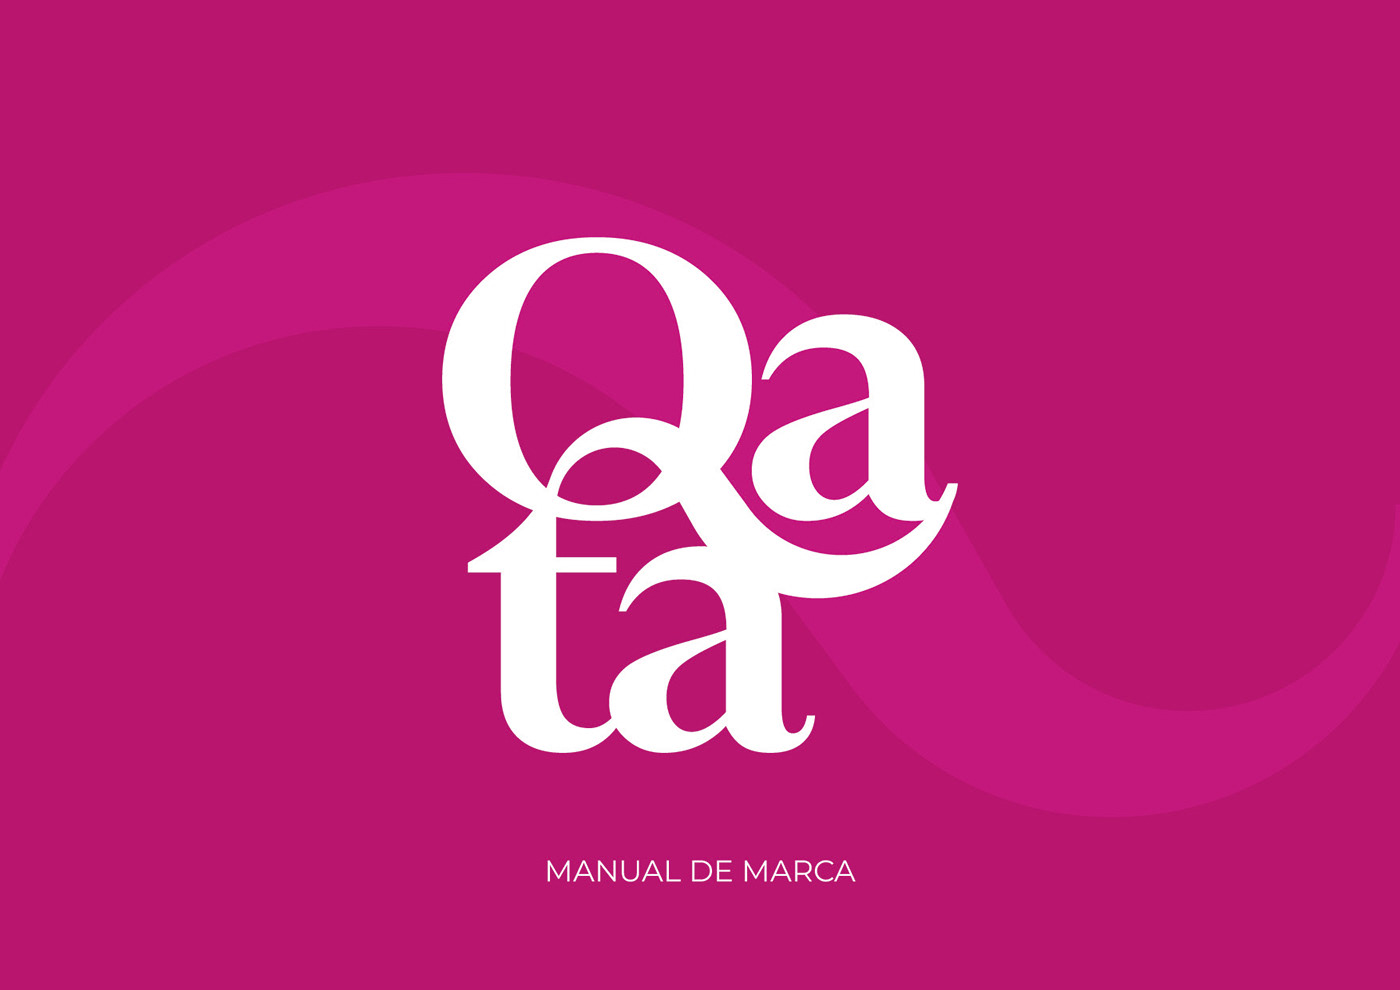 brandbook Manual de Marca marca de ropa brand identity branding  Logo Design marketing  